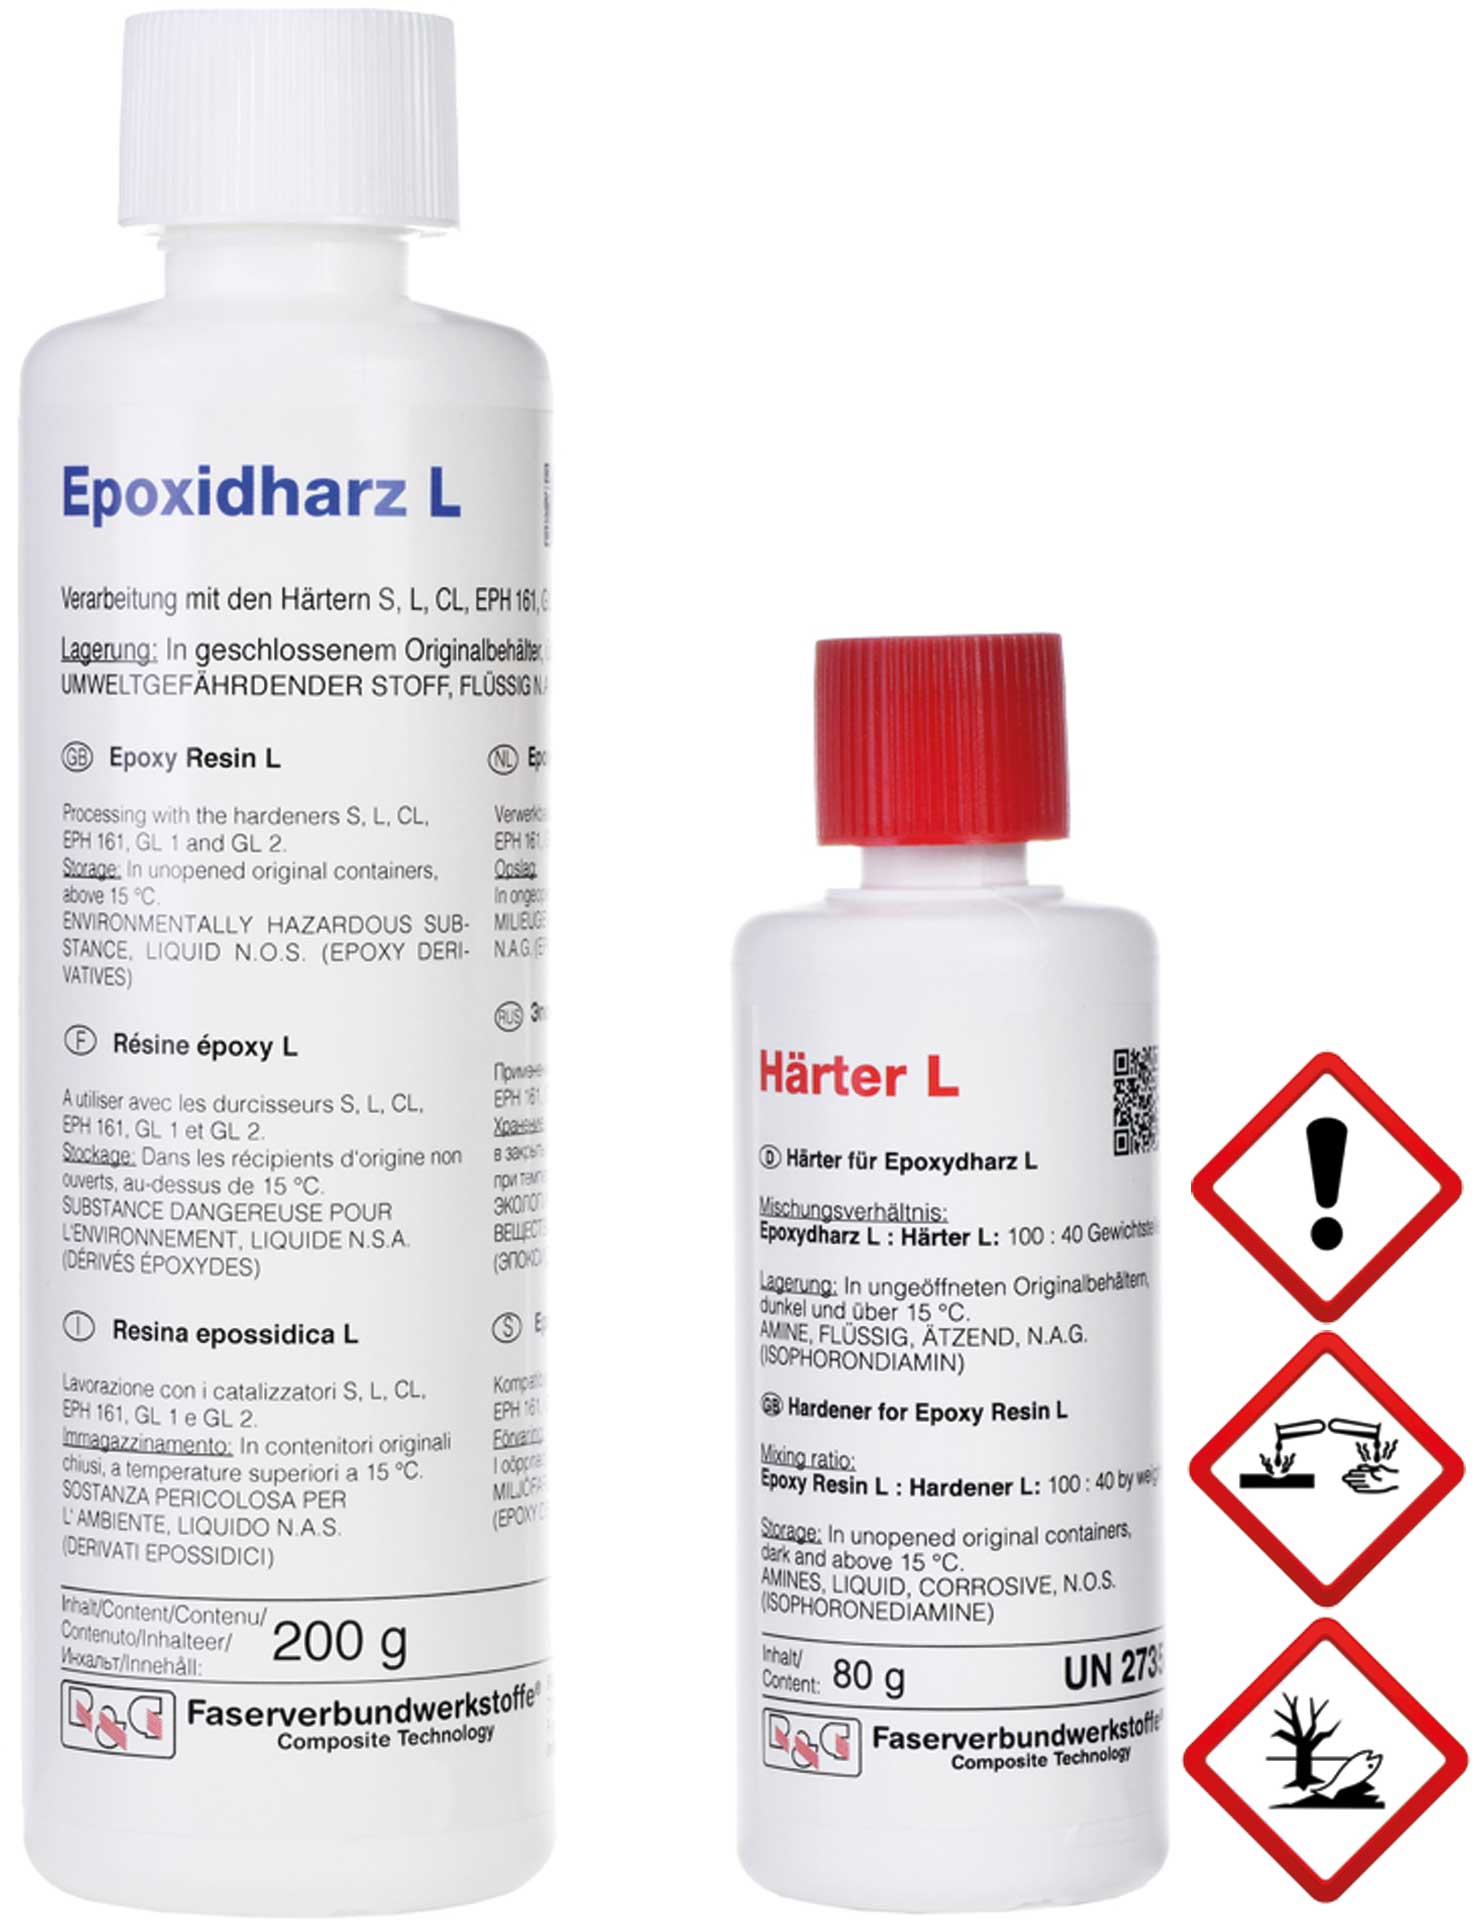 R&G Epoxidharz L + Härter L (40 Min.) Packung/ 280 g